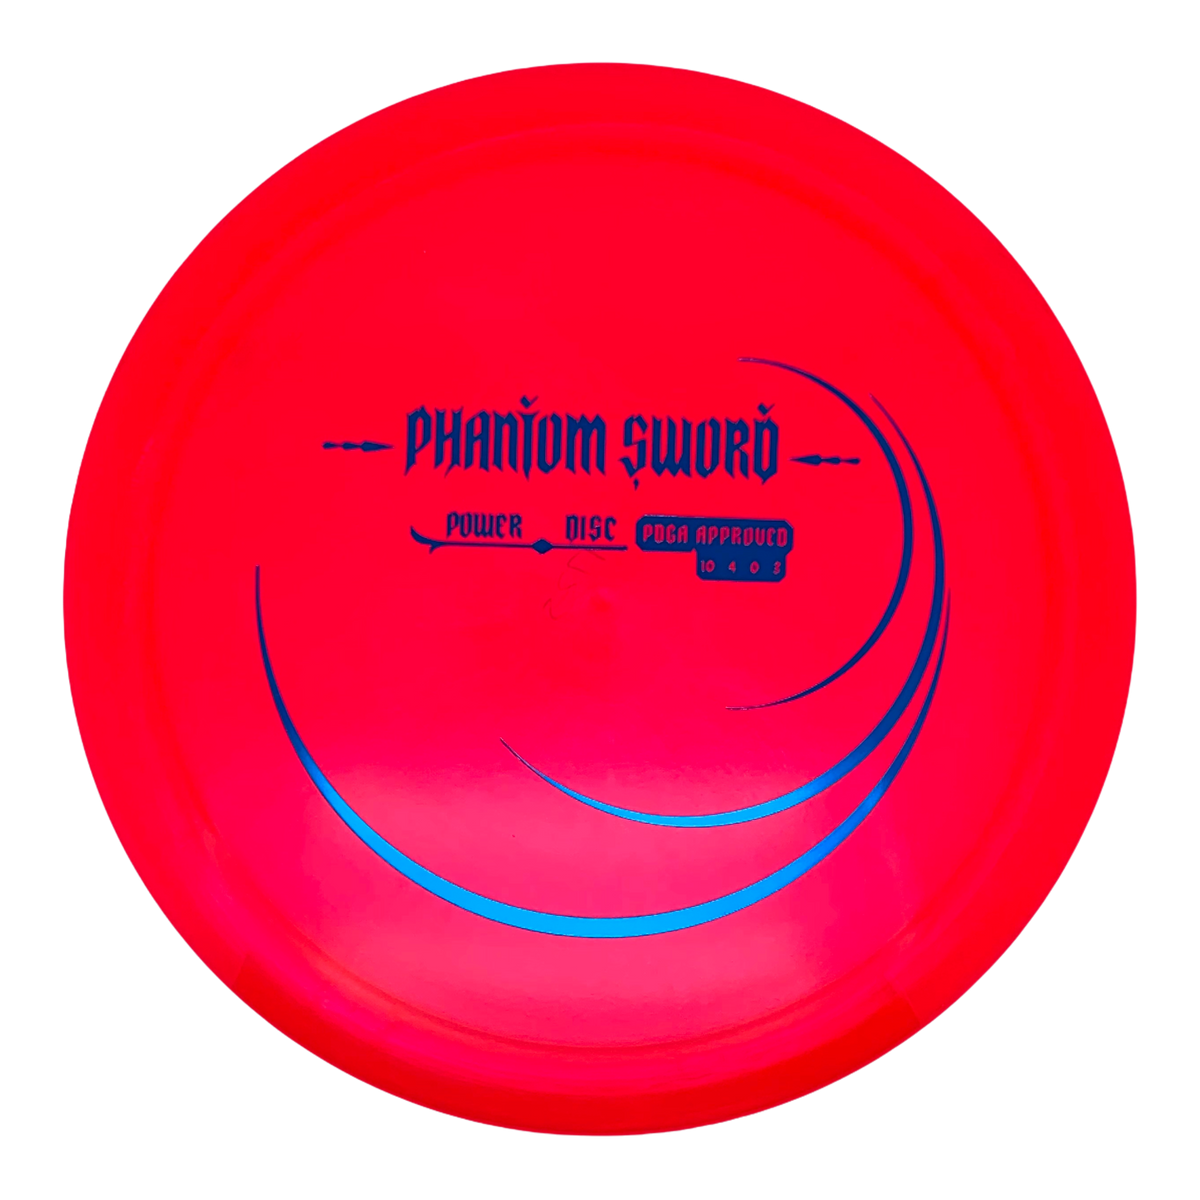 Innova Champion Power Disc - Phantom Sword